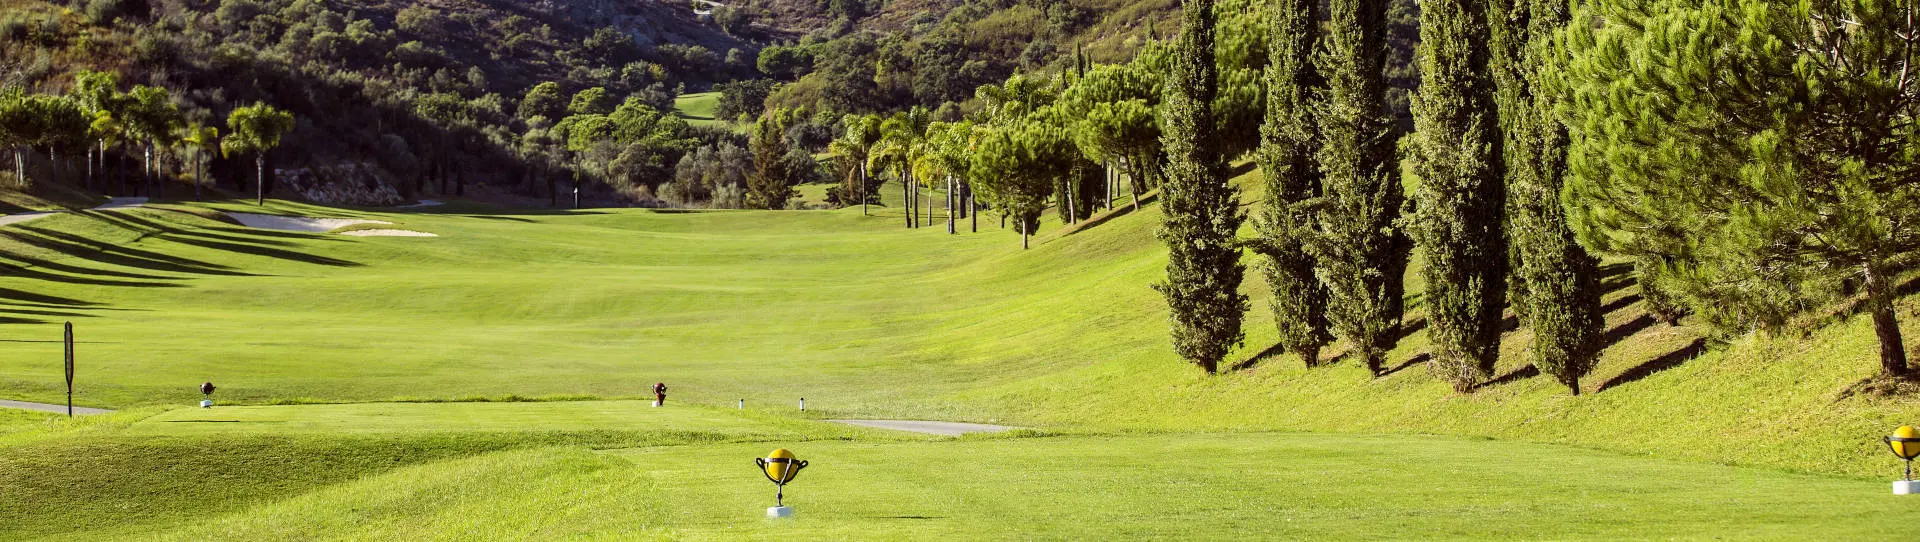 Spain golf holidays - Villa Padierna 3 Rounds Golf Pack - Photo 3